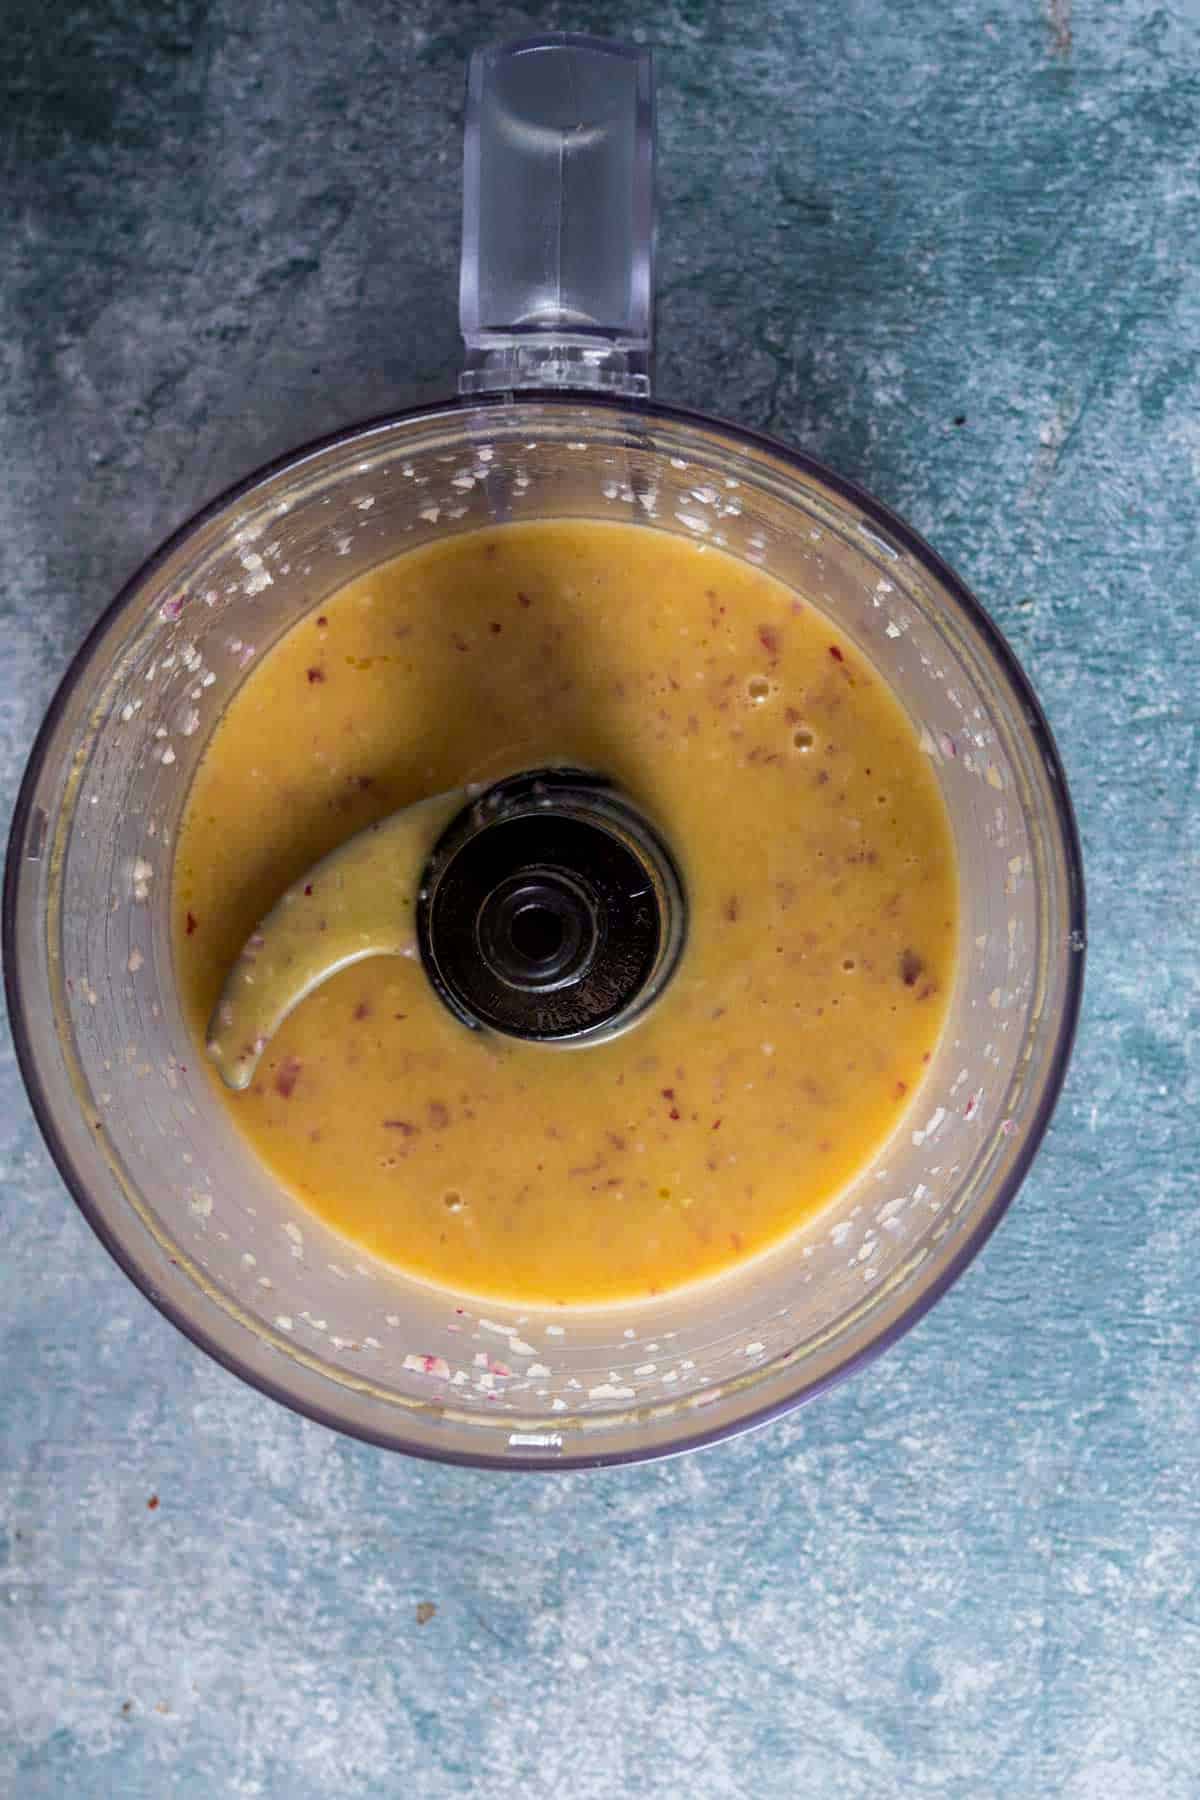 yellow liquid in a food processor